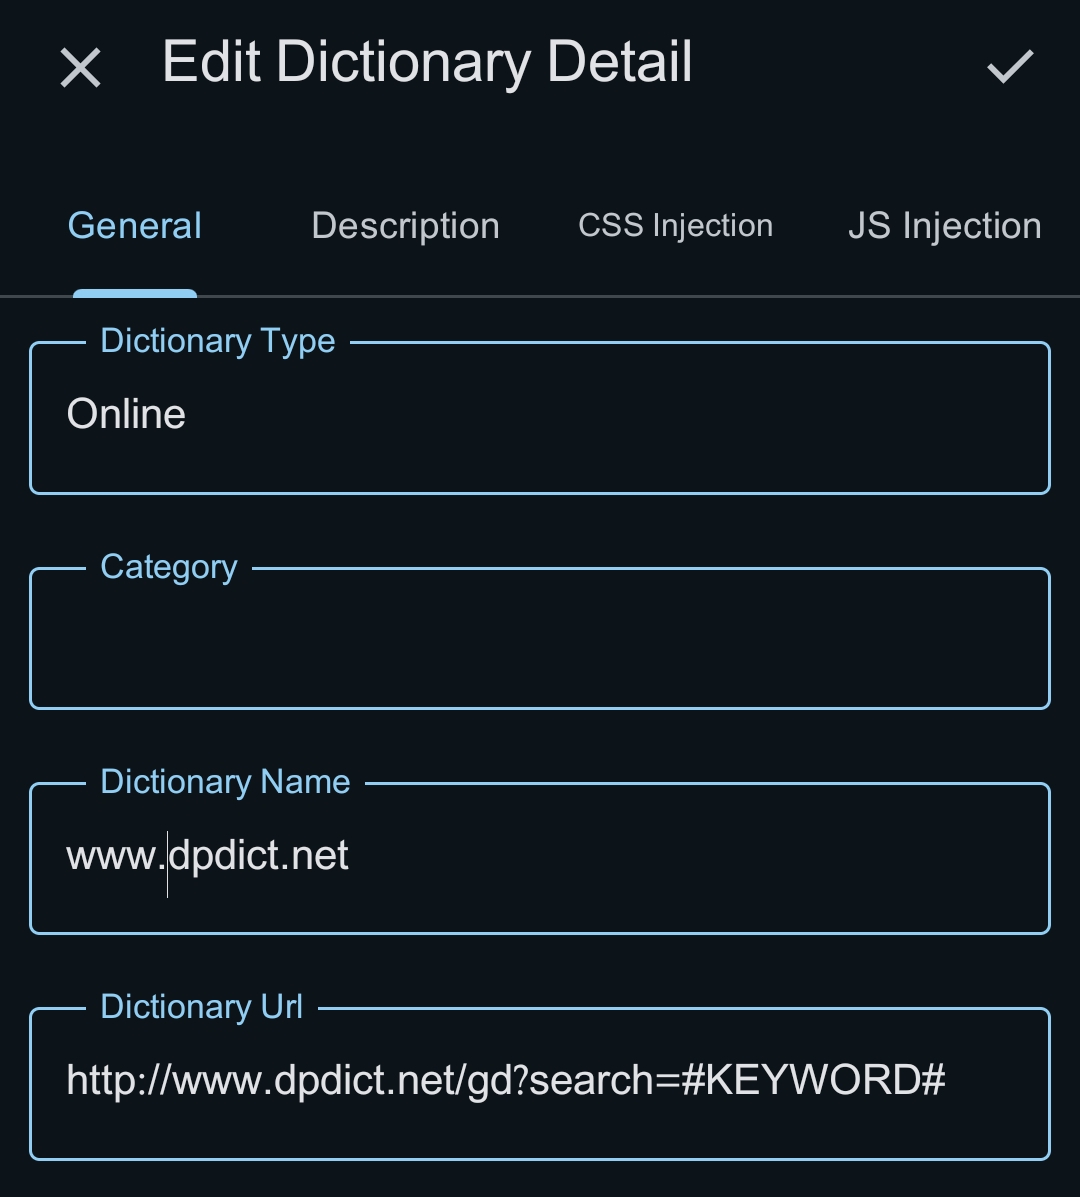 Edit Dictionary Details